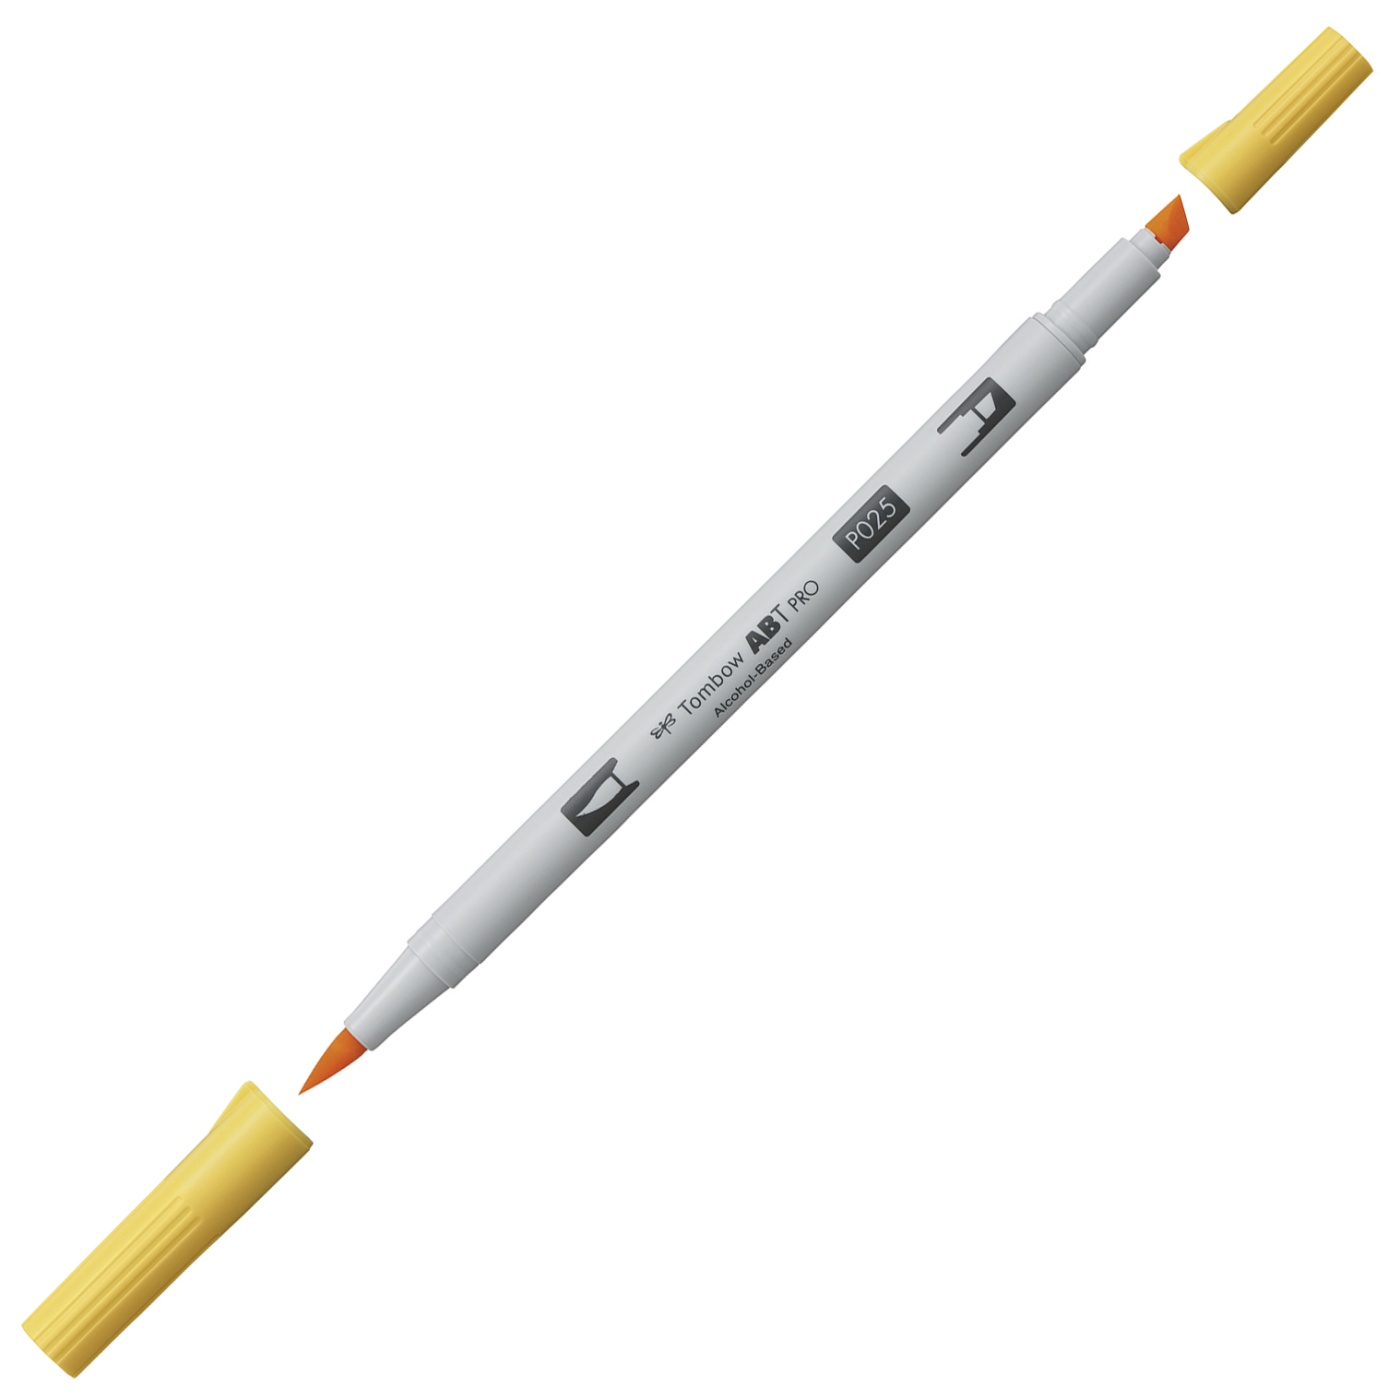 ABT PRO Dual Brush Pen 5-set Pastel in the group Pens / Artist Pens / Illustration Markers at Voorcrea (101257)